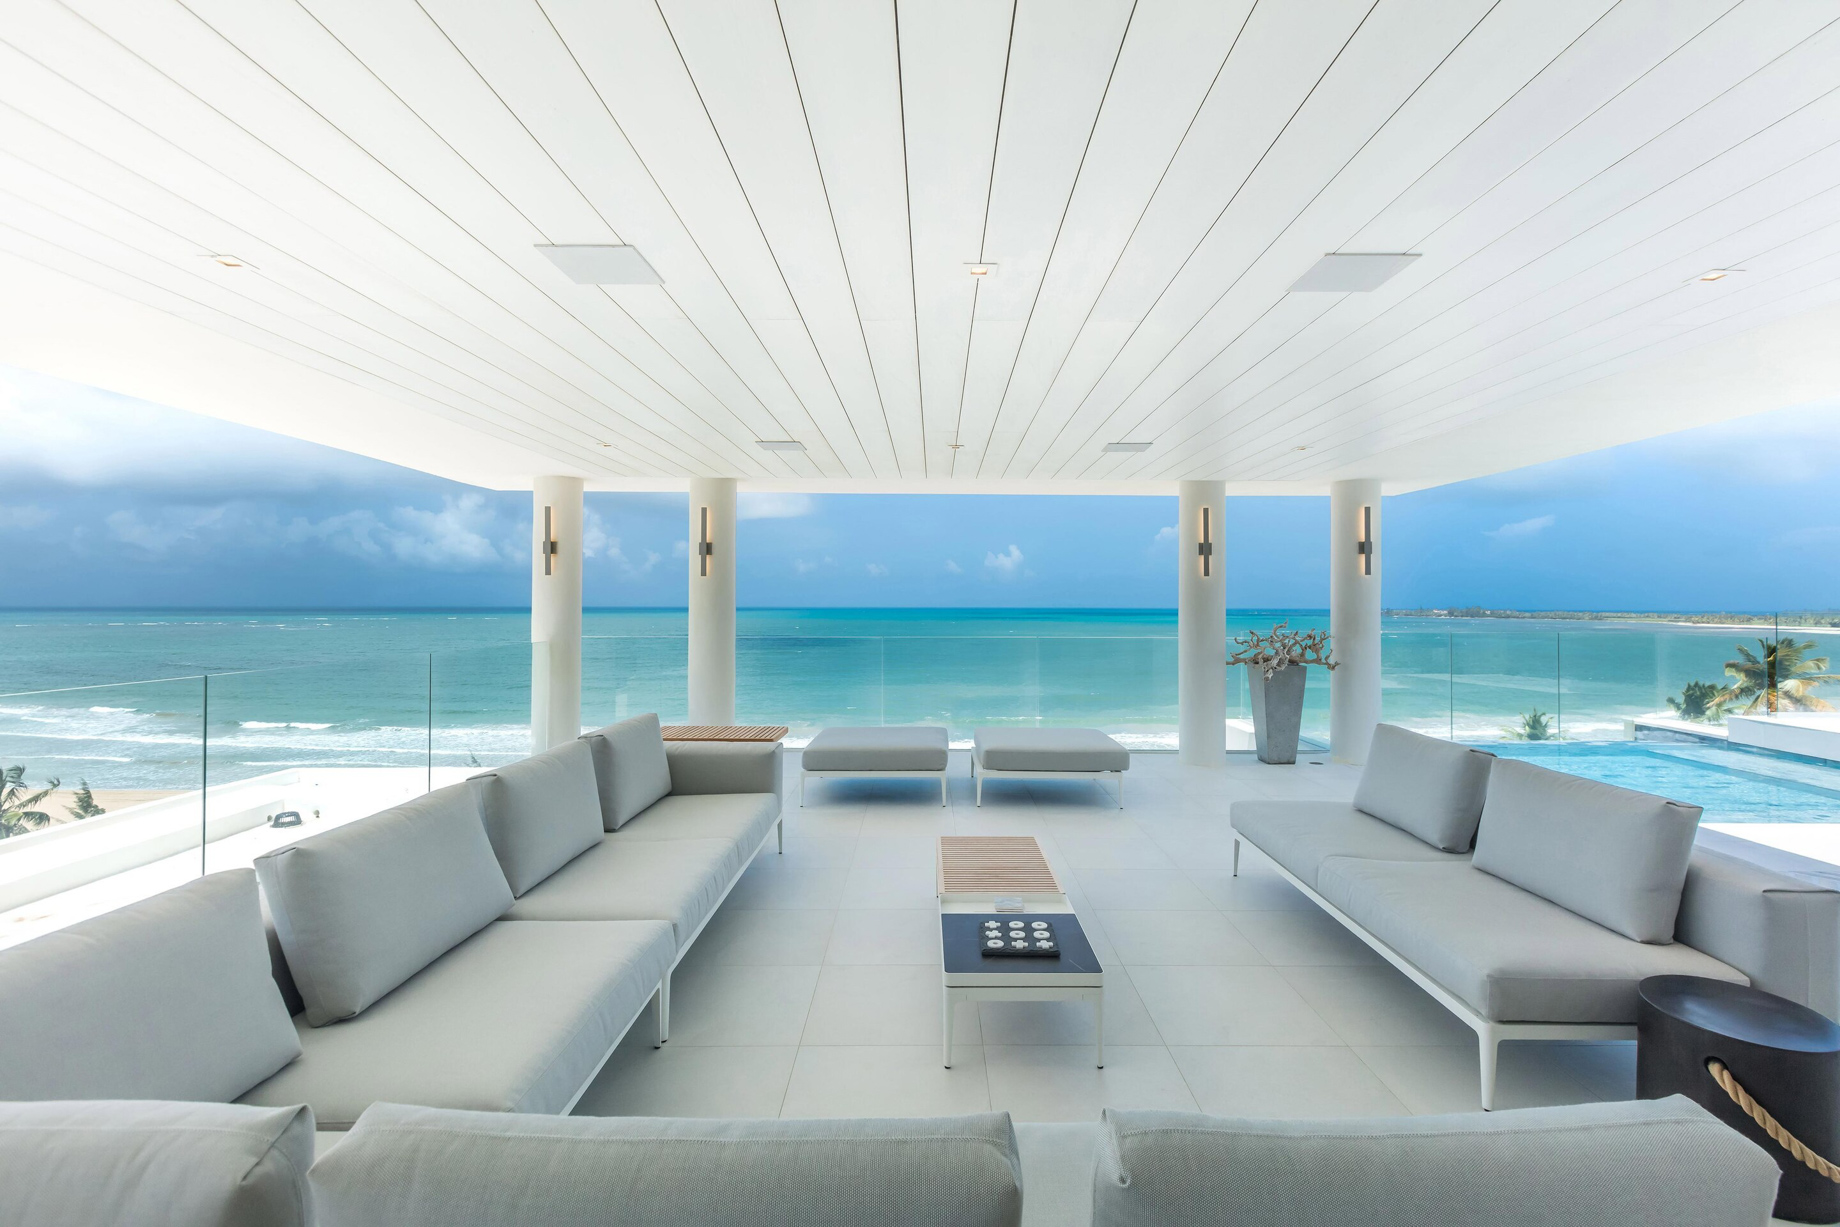 The St. Regis Bahia Beach Resort – Rio Grande, Puerto Rico – Ocean Drive Residences Penthouse Exterior Living